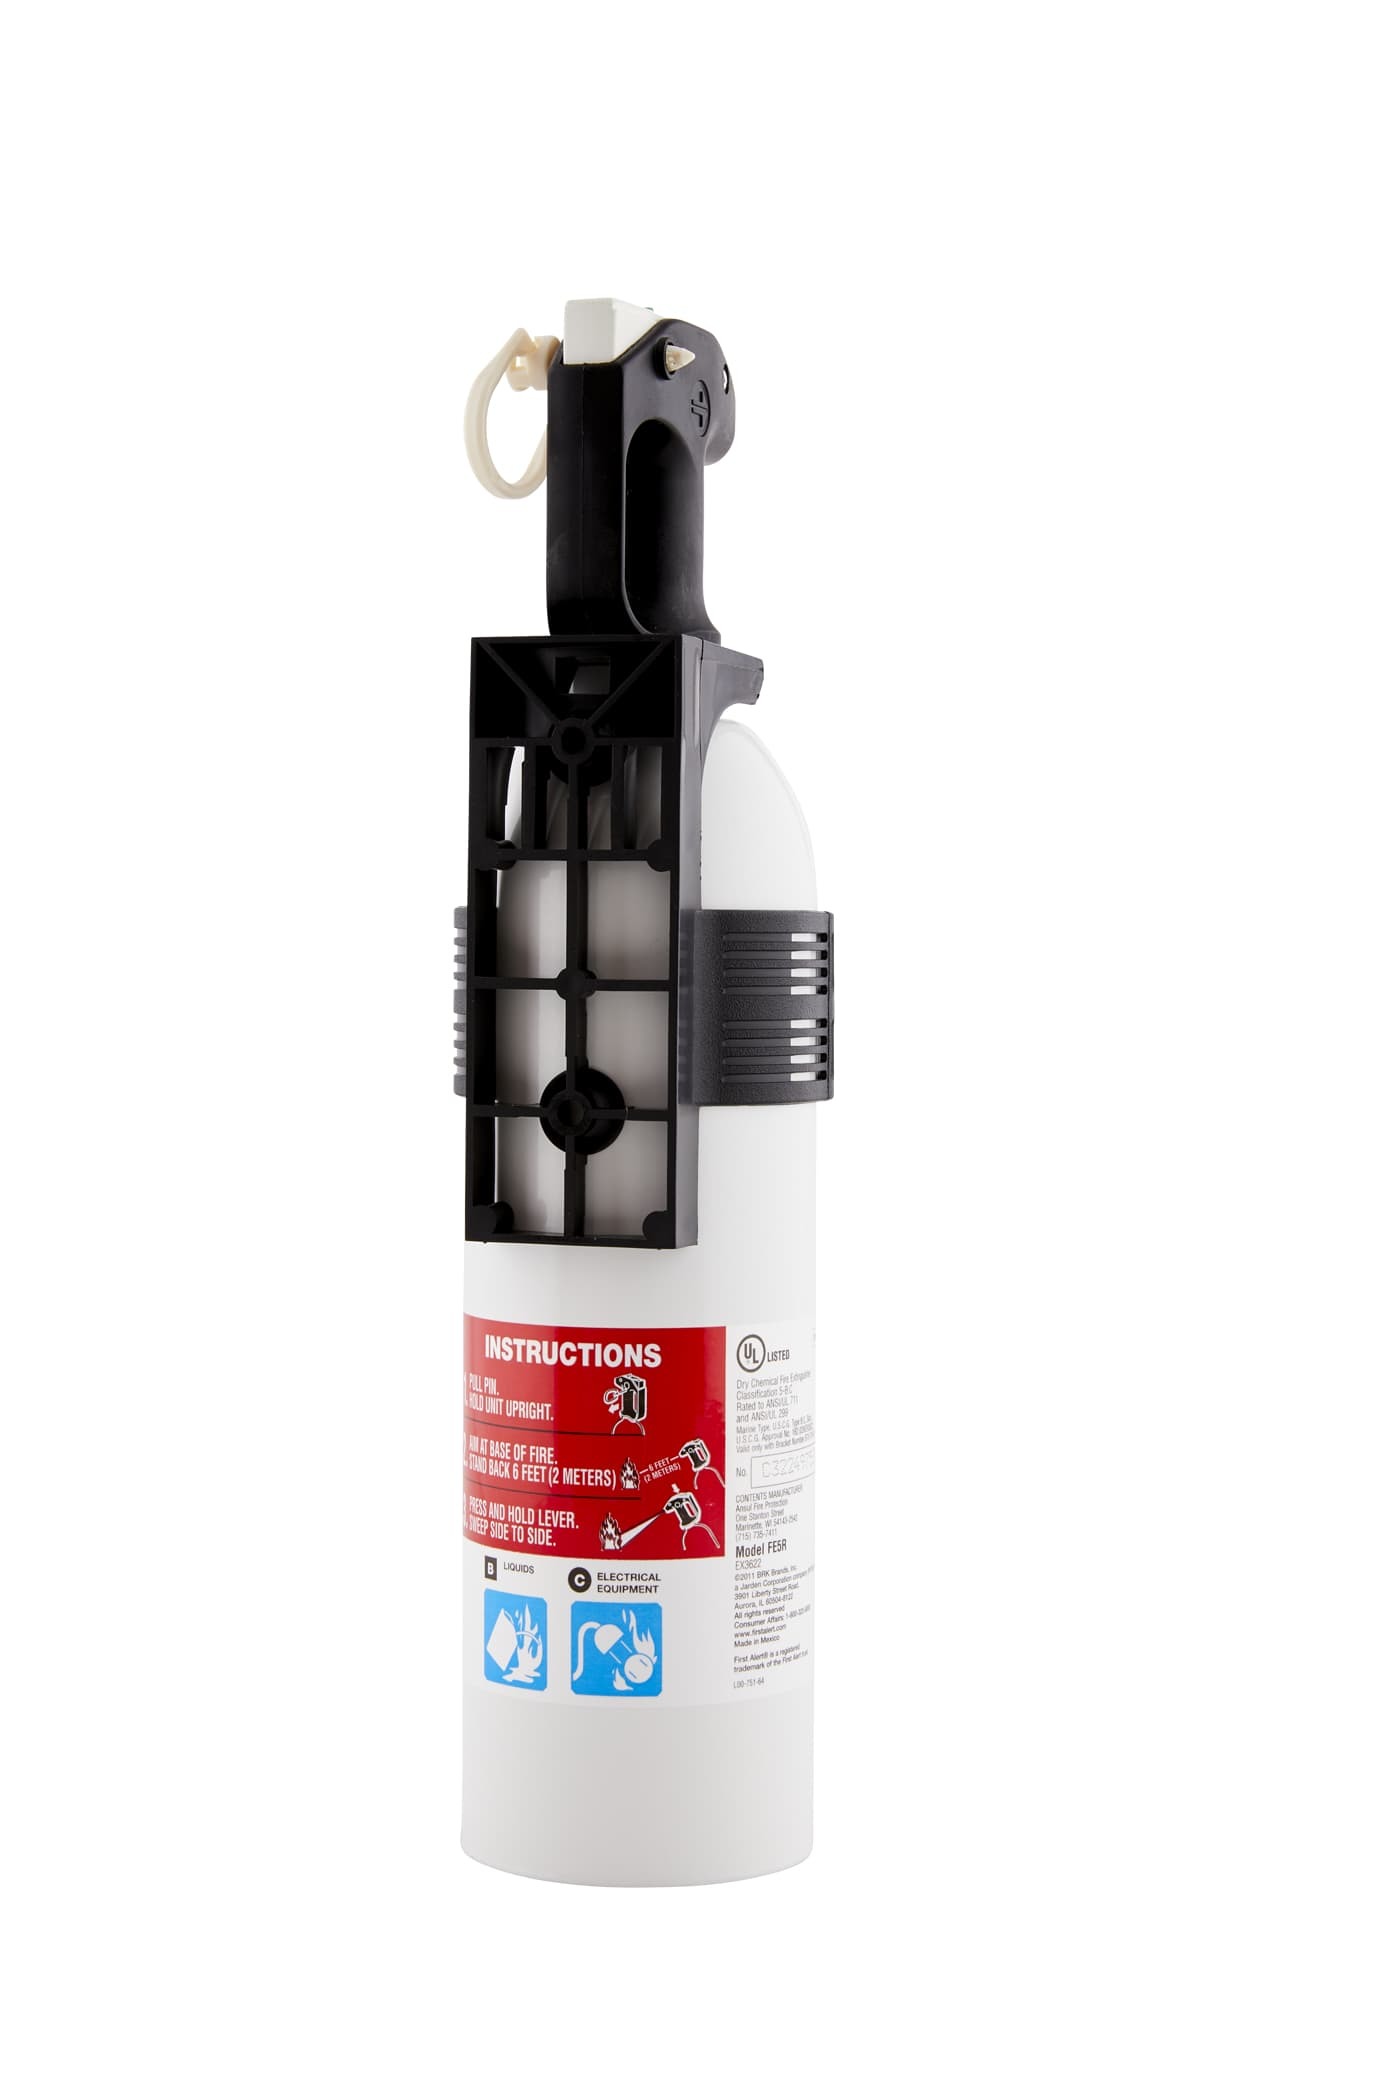 PWC Fire Extinguisher White 1.4 Lb. - 5-B:C - Click Image to Close